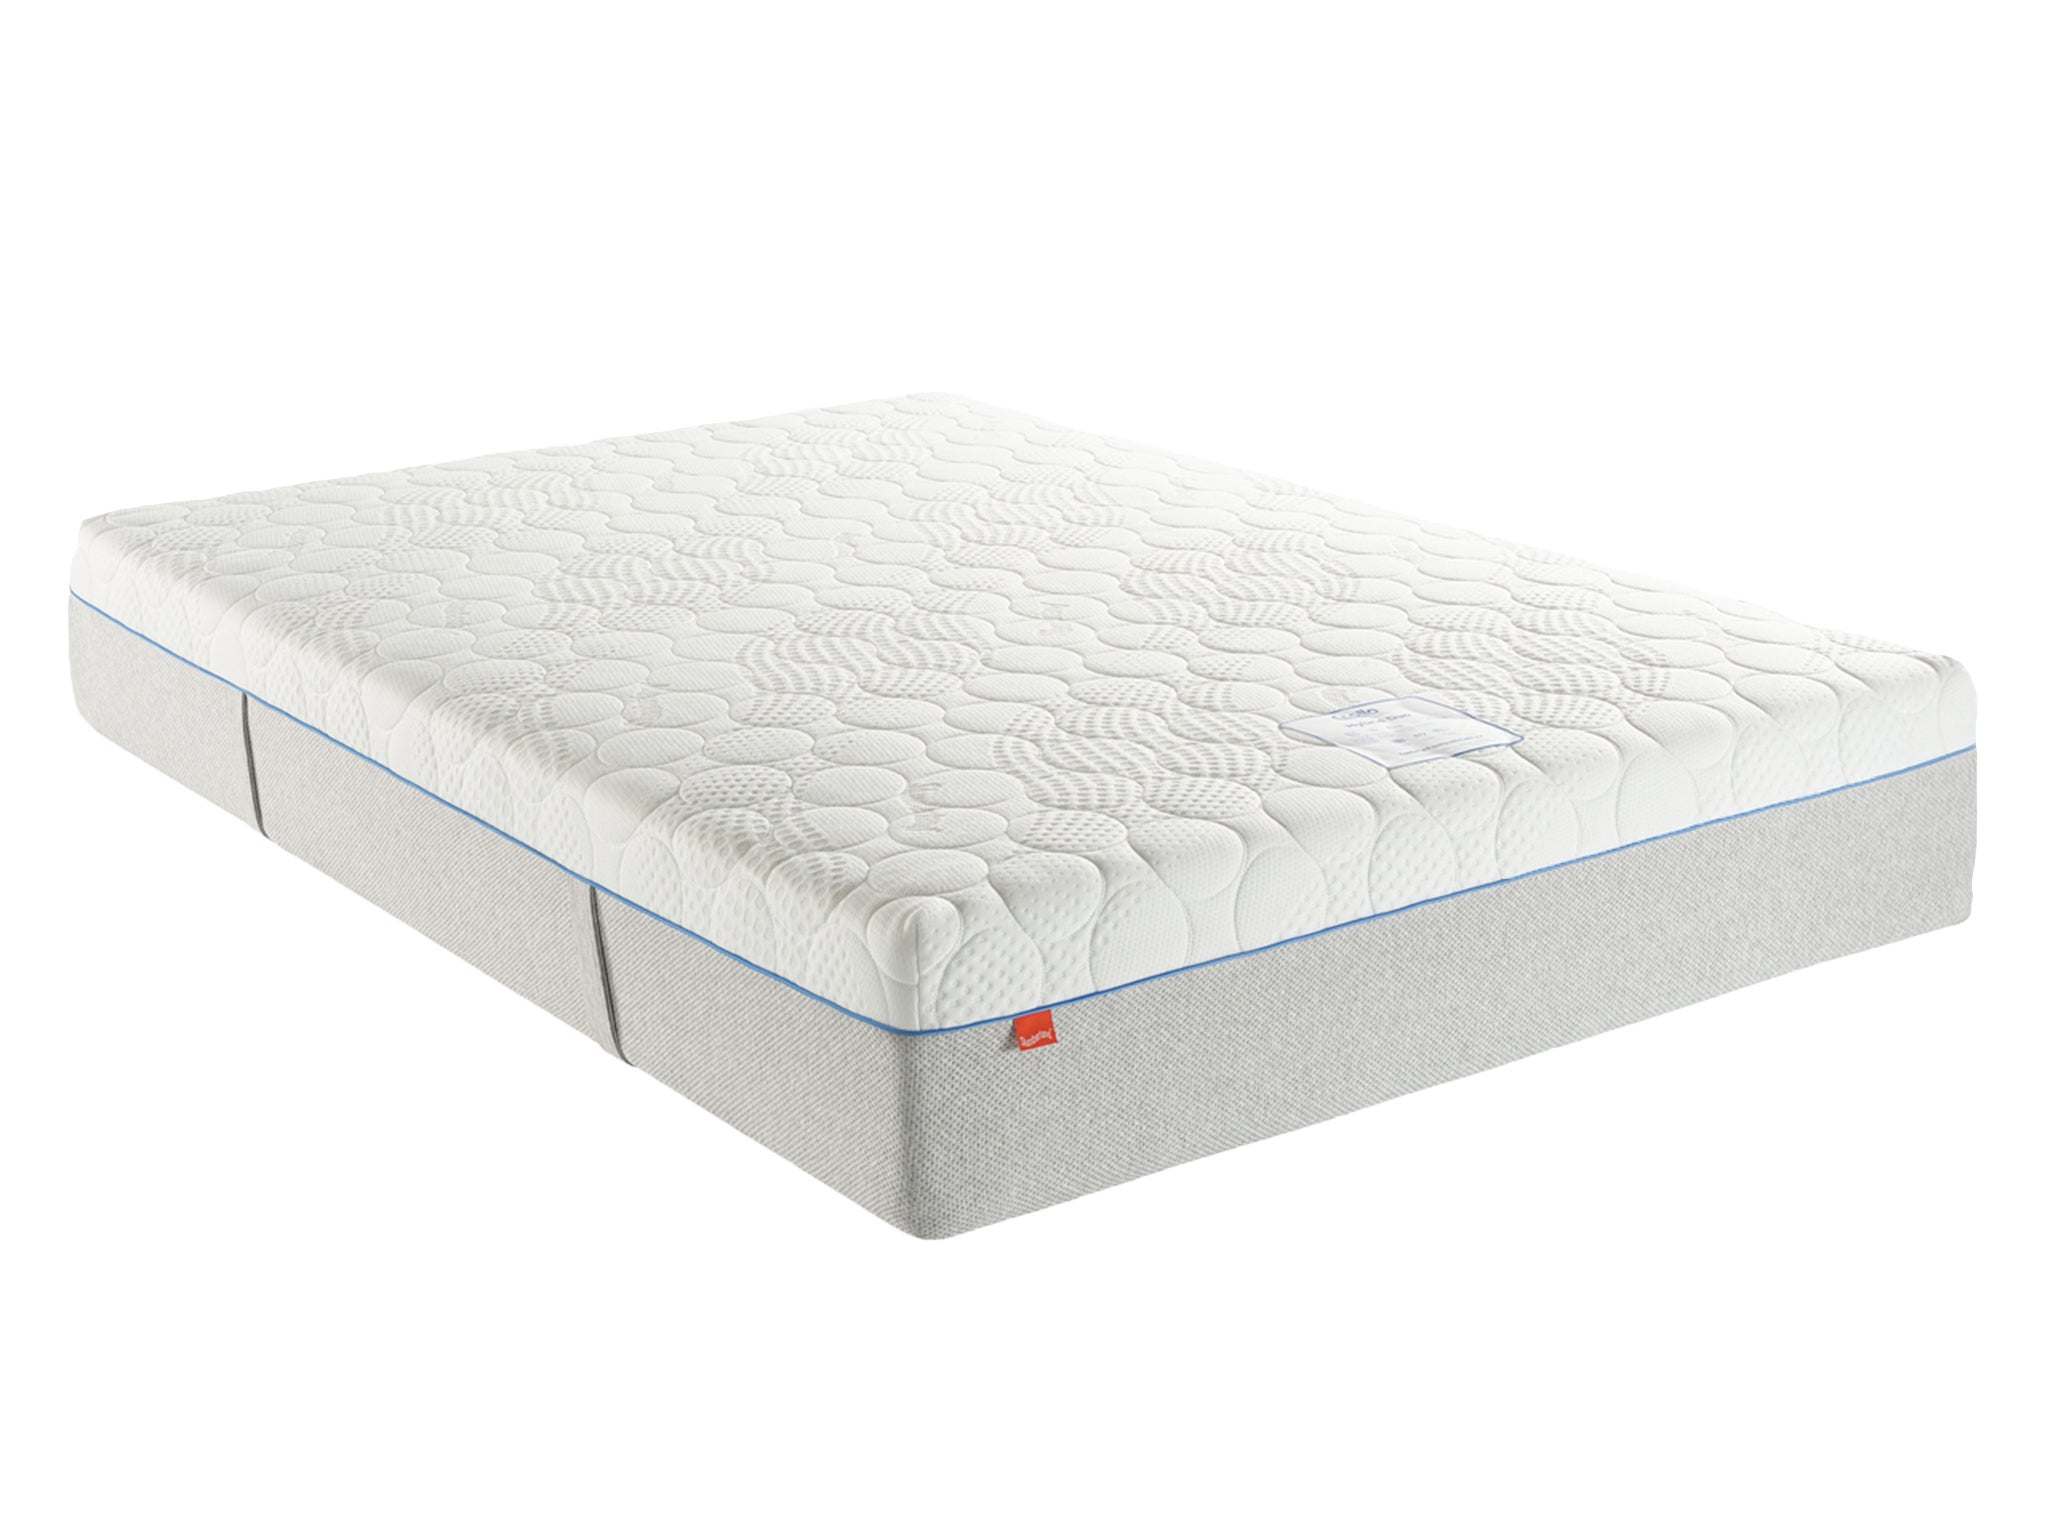 Bensons for Beds rollo slumberland hybrid duo mattress .jpg